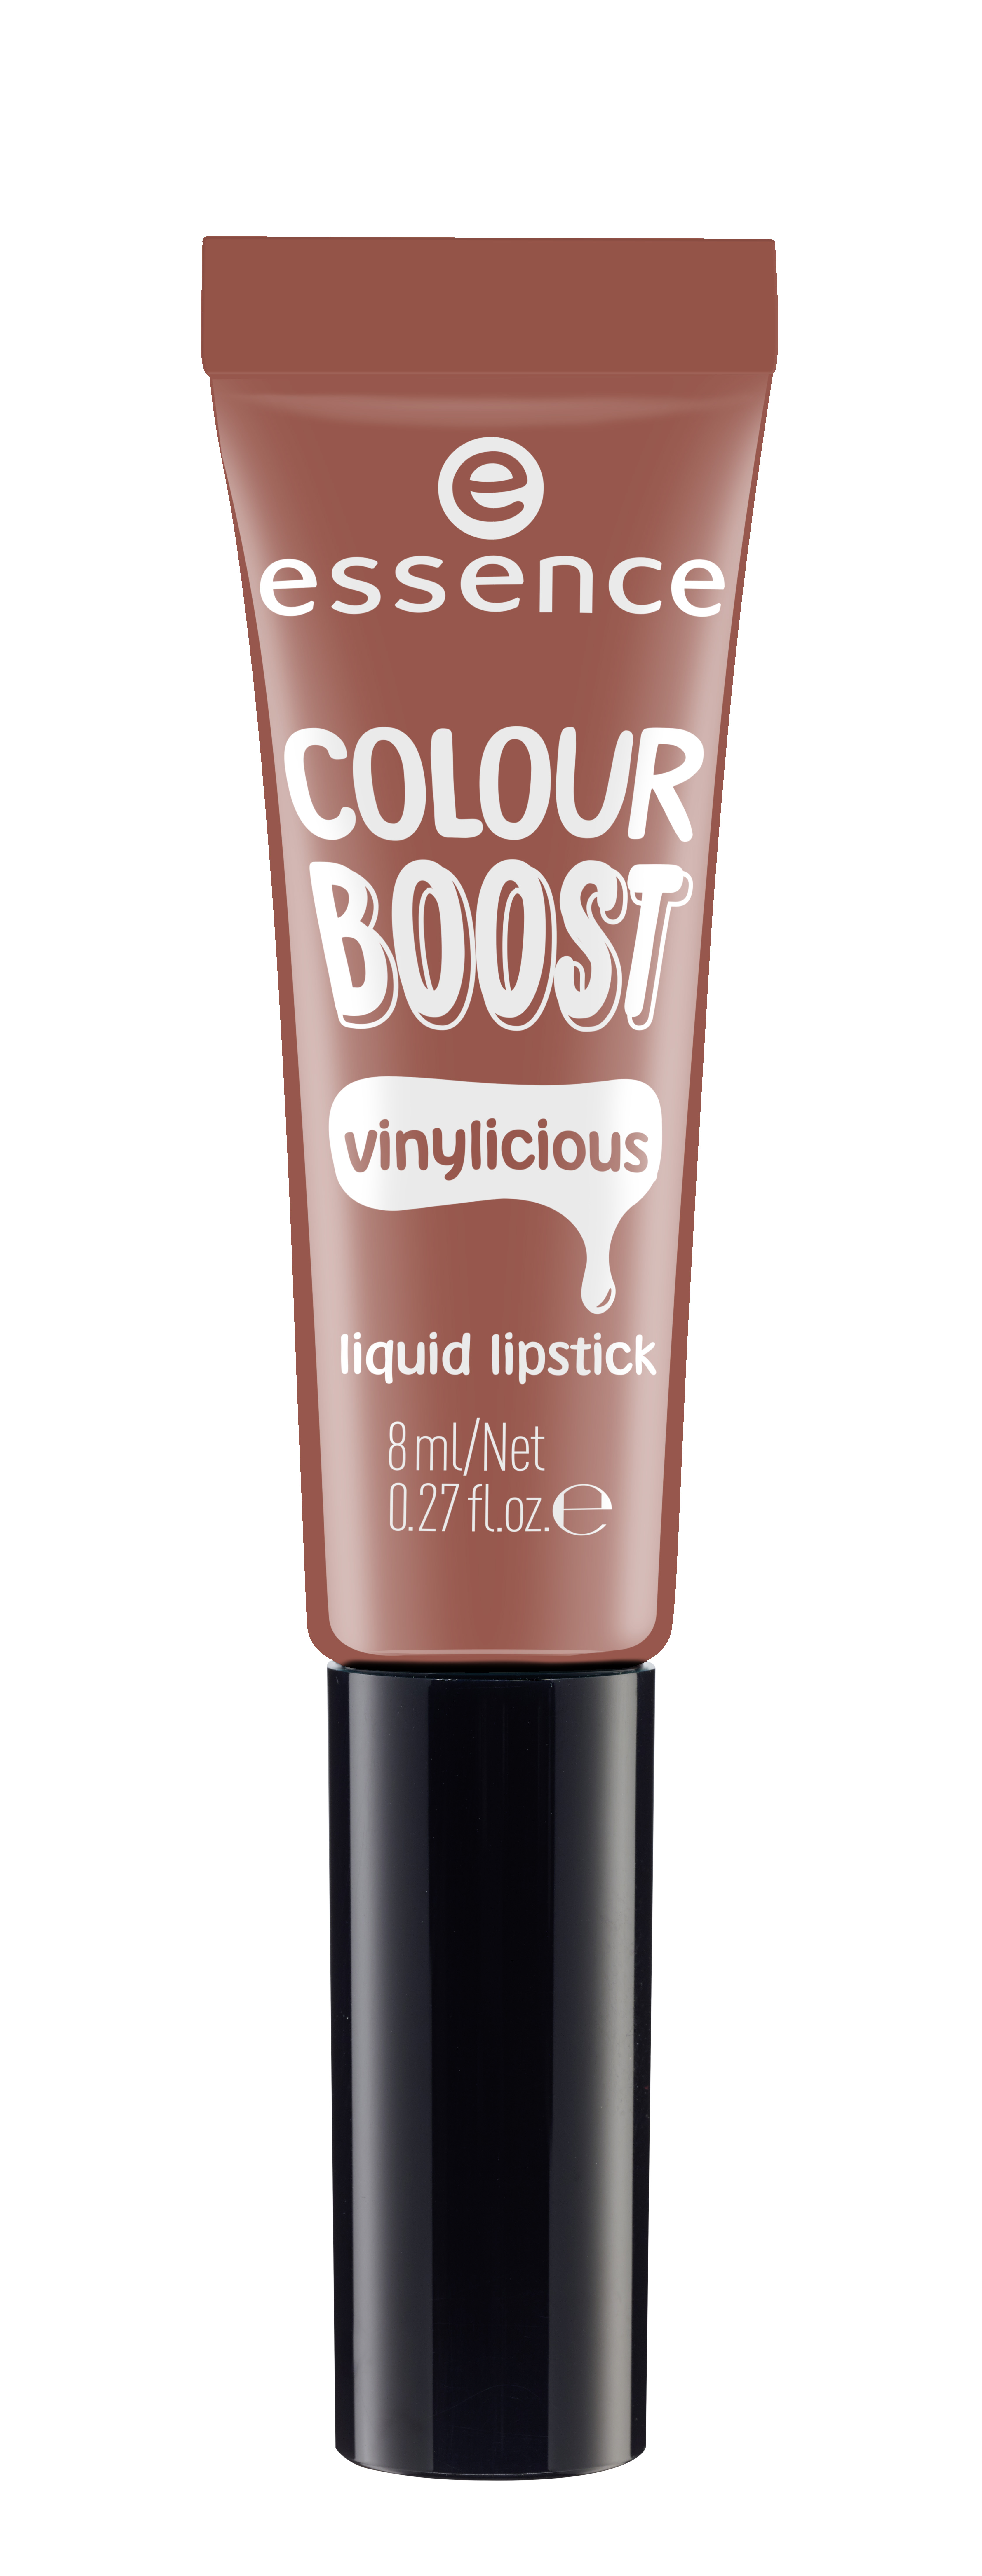 ess. colour boost vinylicious liquid lipstick 02